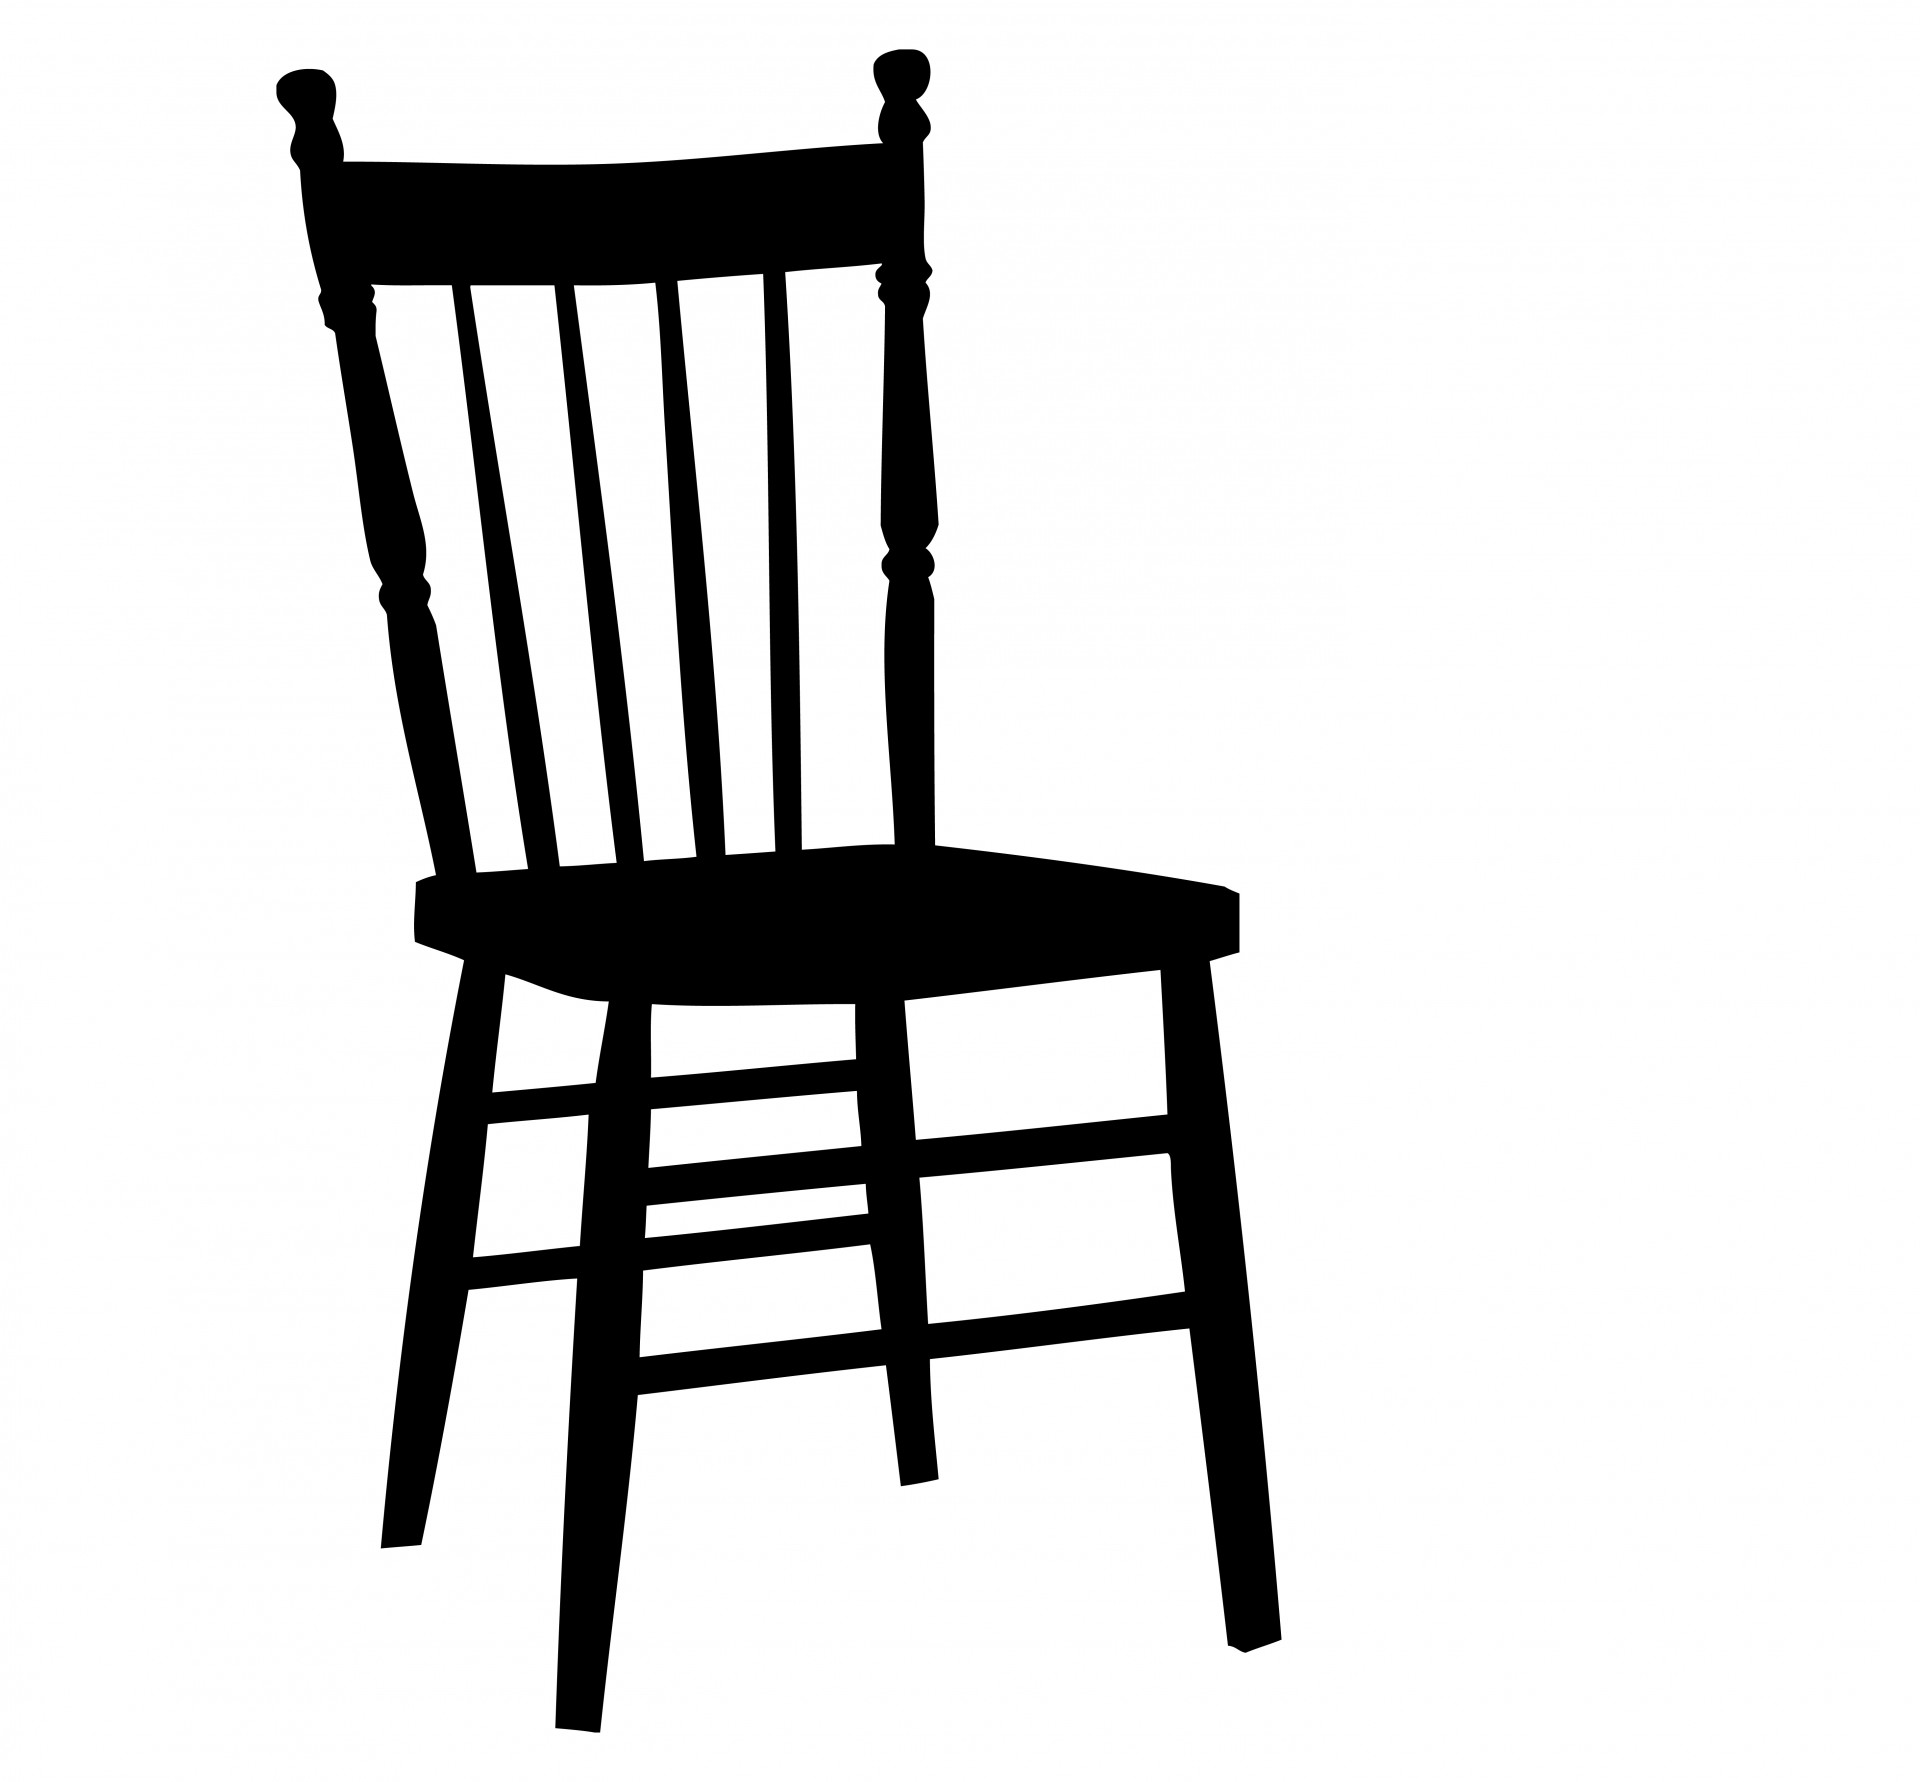 Free Chair Clipart - Tumundografico